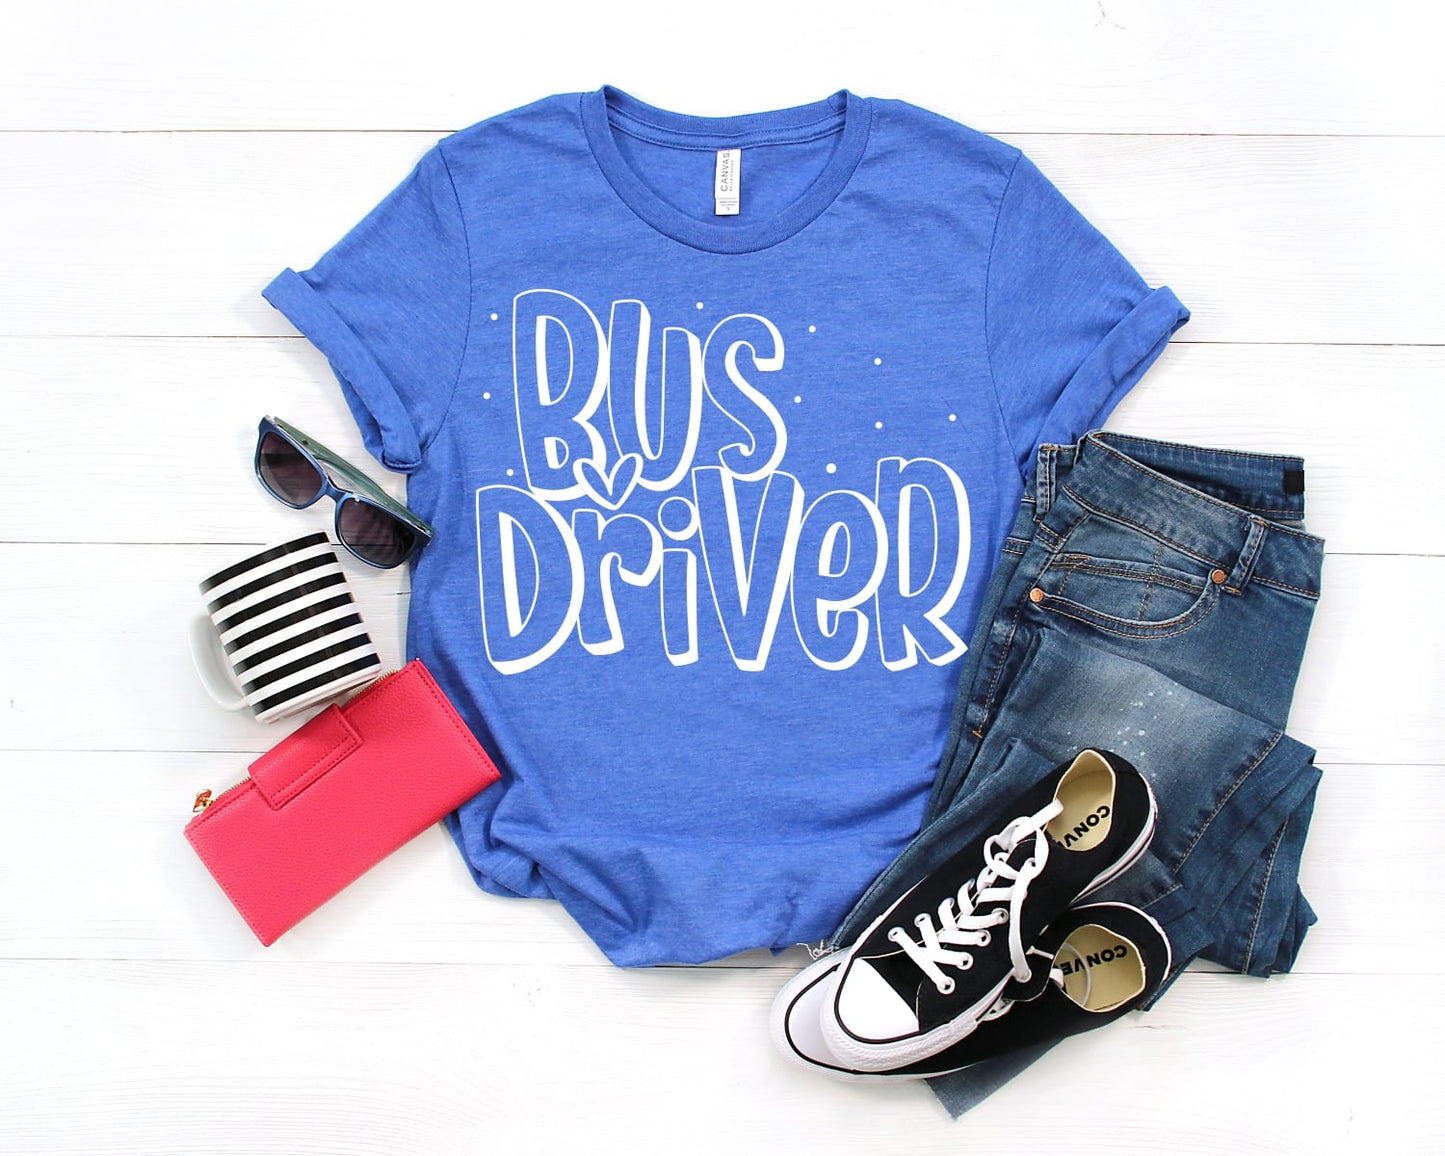 Bus Driver | School